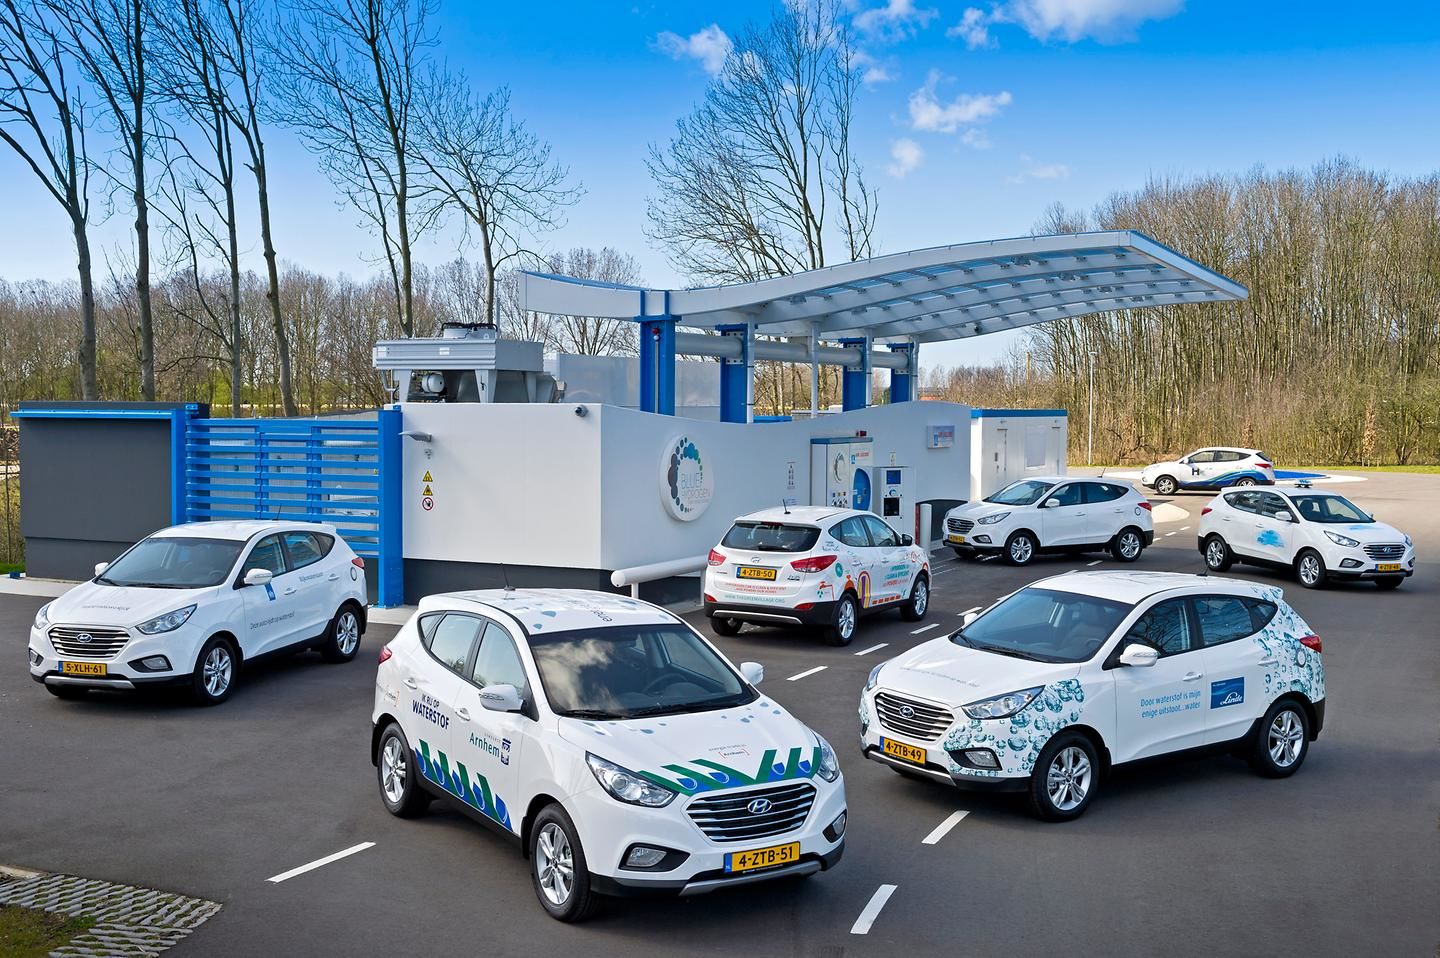 Dutch university transforms Hyundai SUV into a power plant